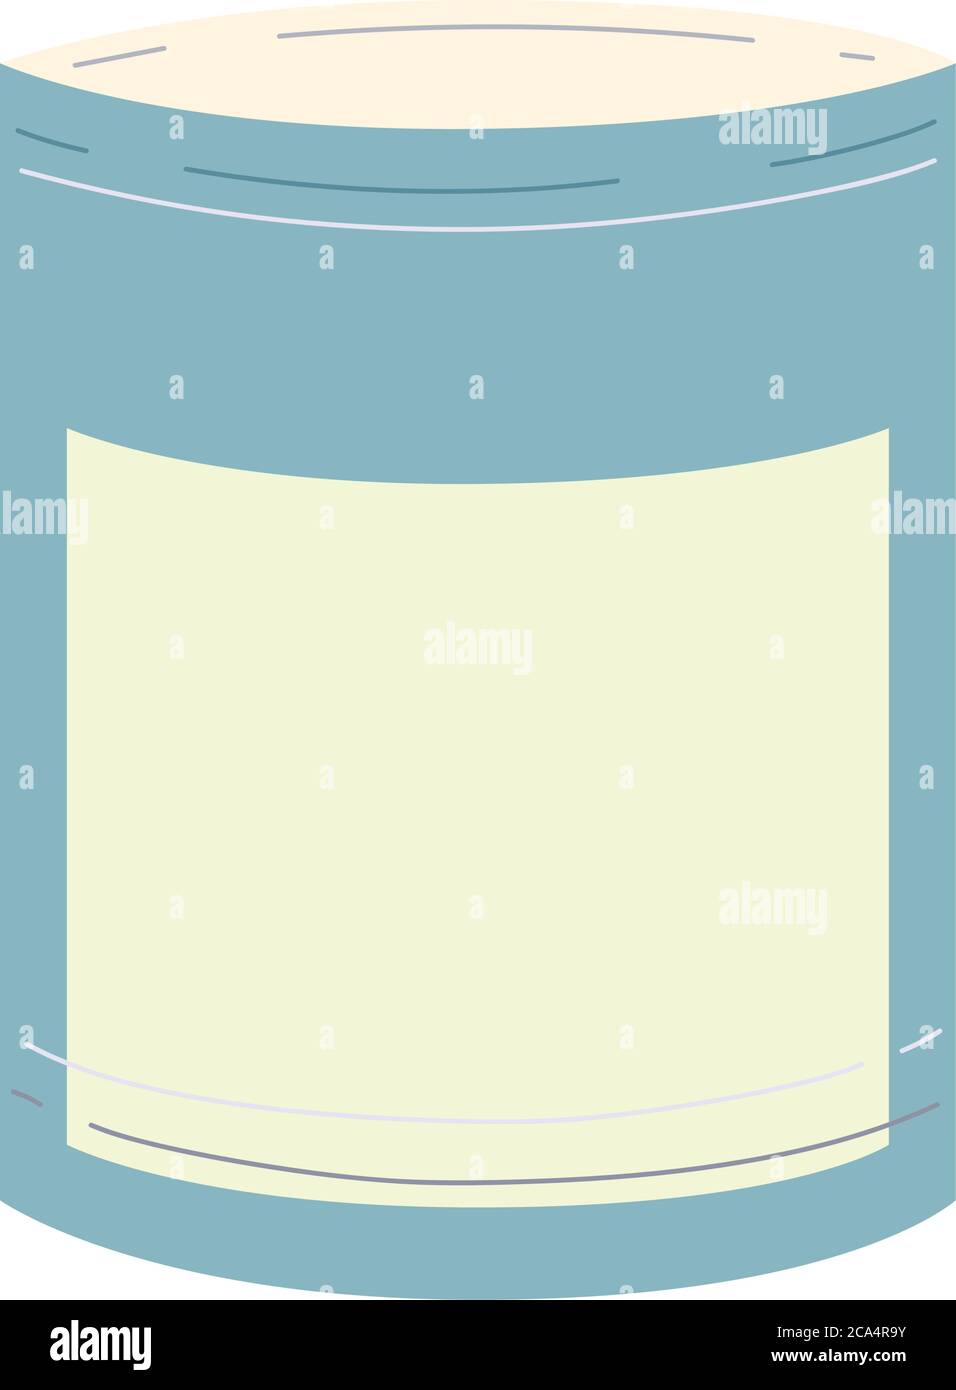 Cartoon Konserven Gläser auf weißem Hintergrund Vektor Illustration Design Stock Vektor